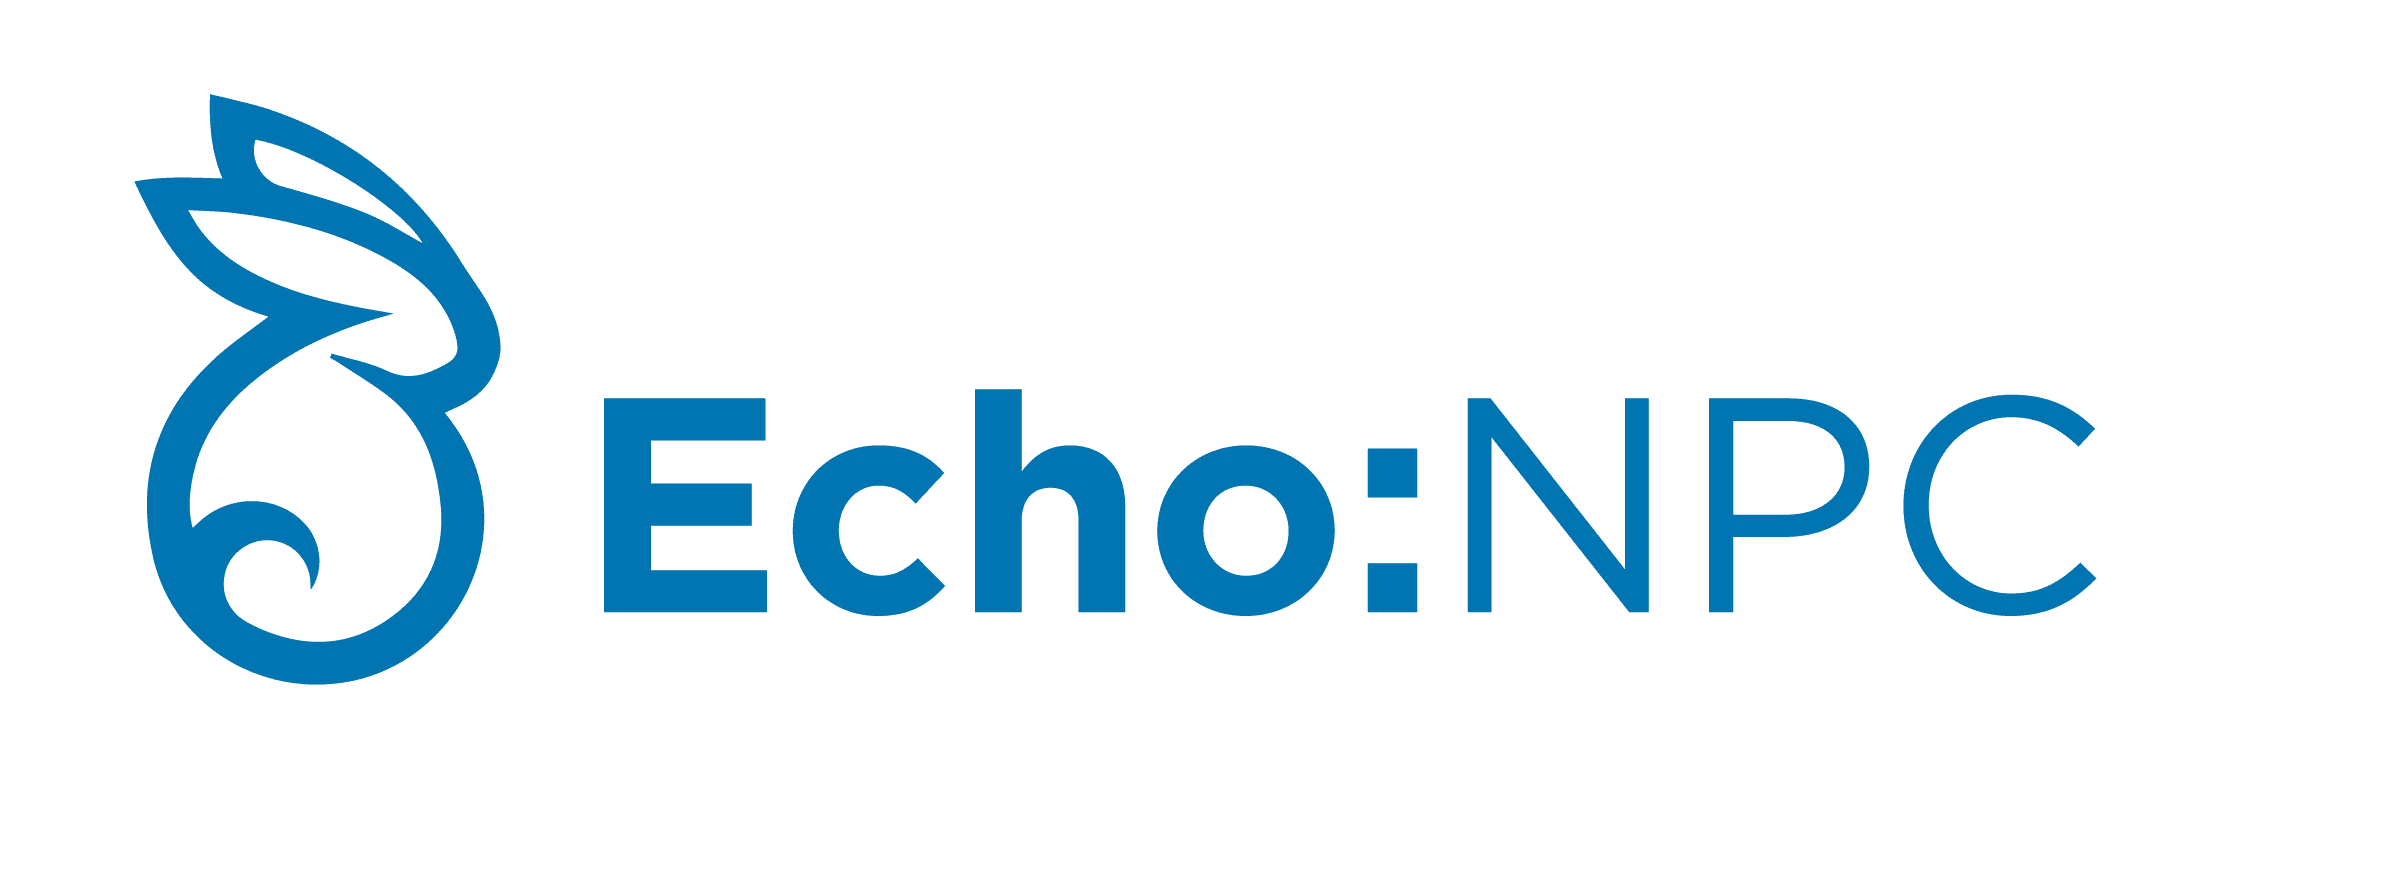 Echo:NPC Logo: Bunny with Echo NPC text